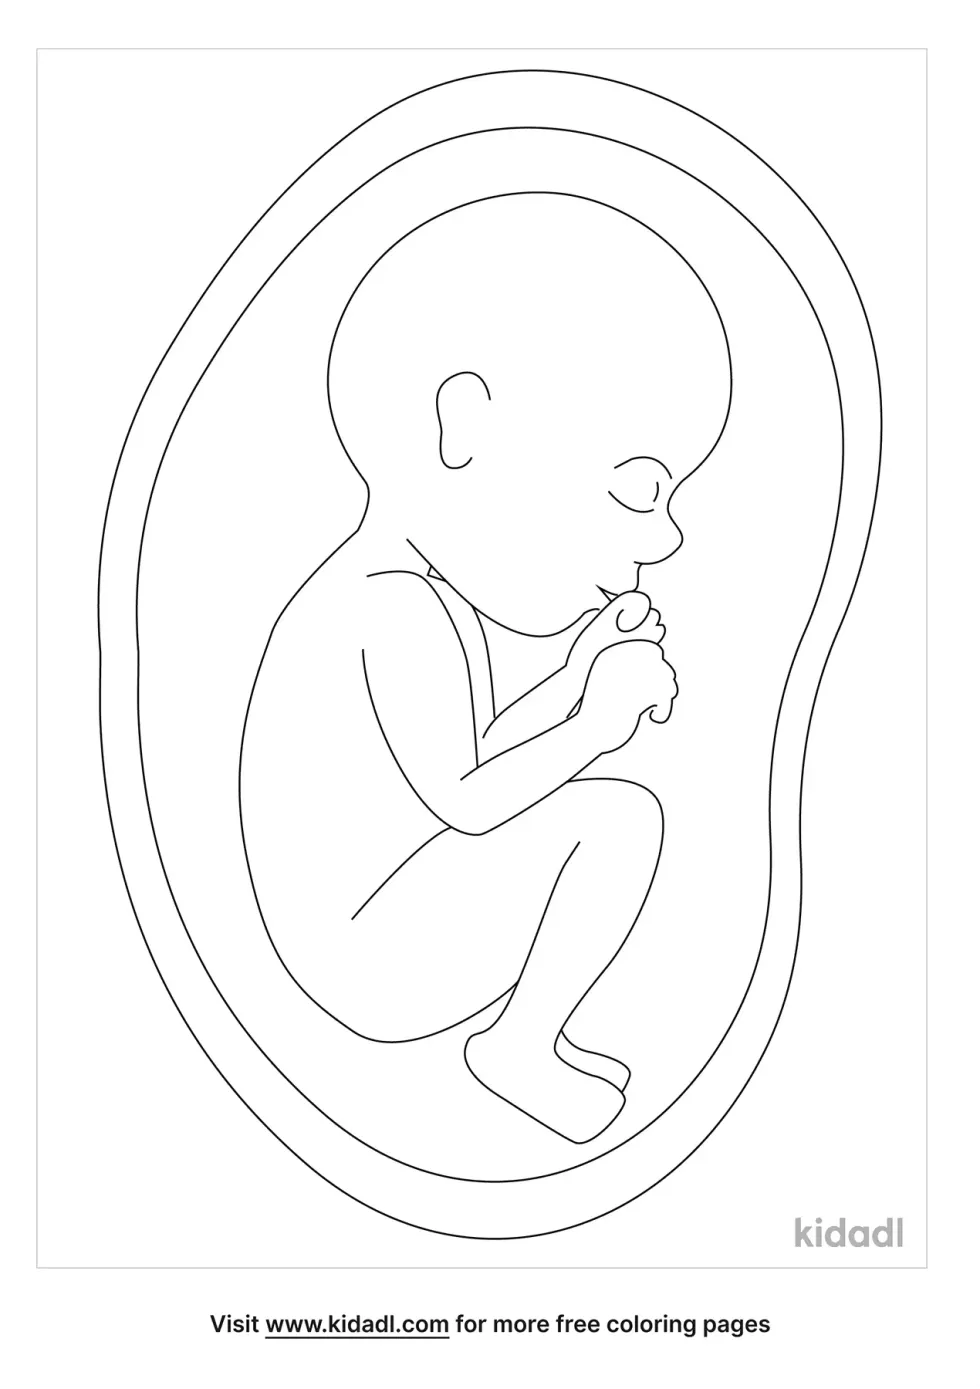 Fetus Coloring Page